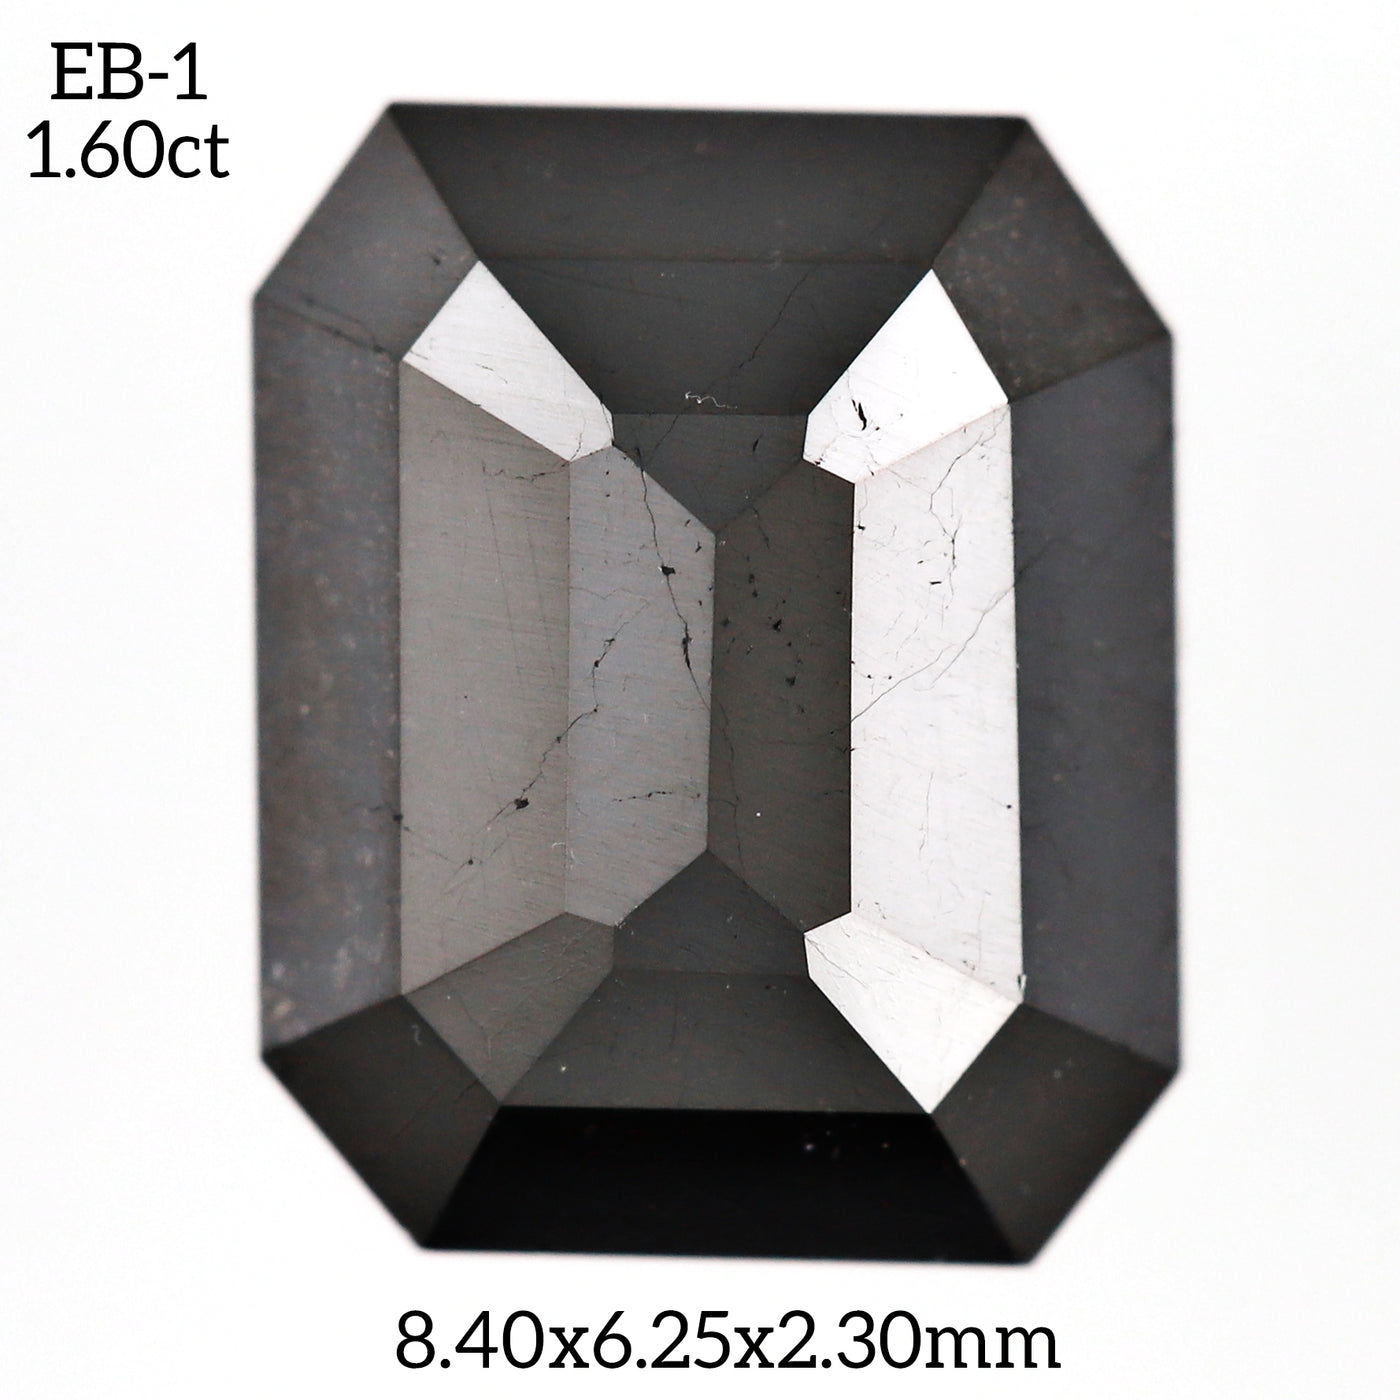 EB1 - Black emerald diamond